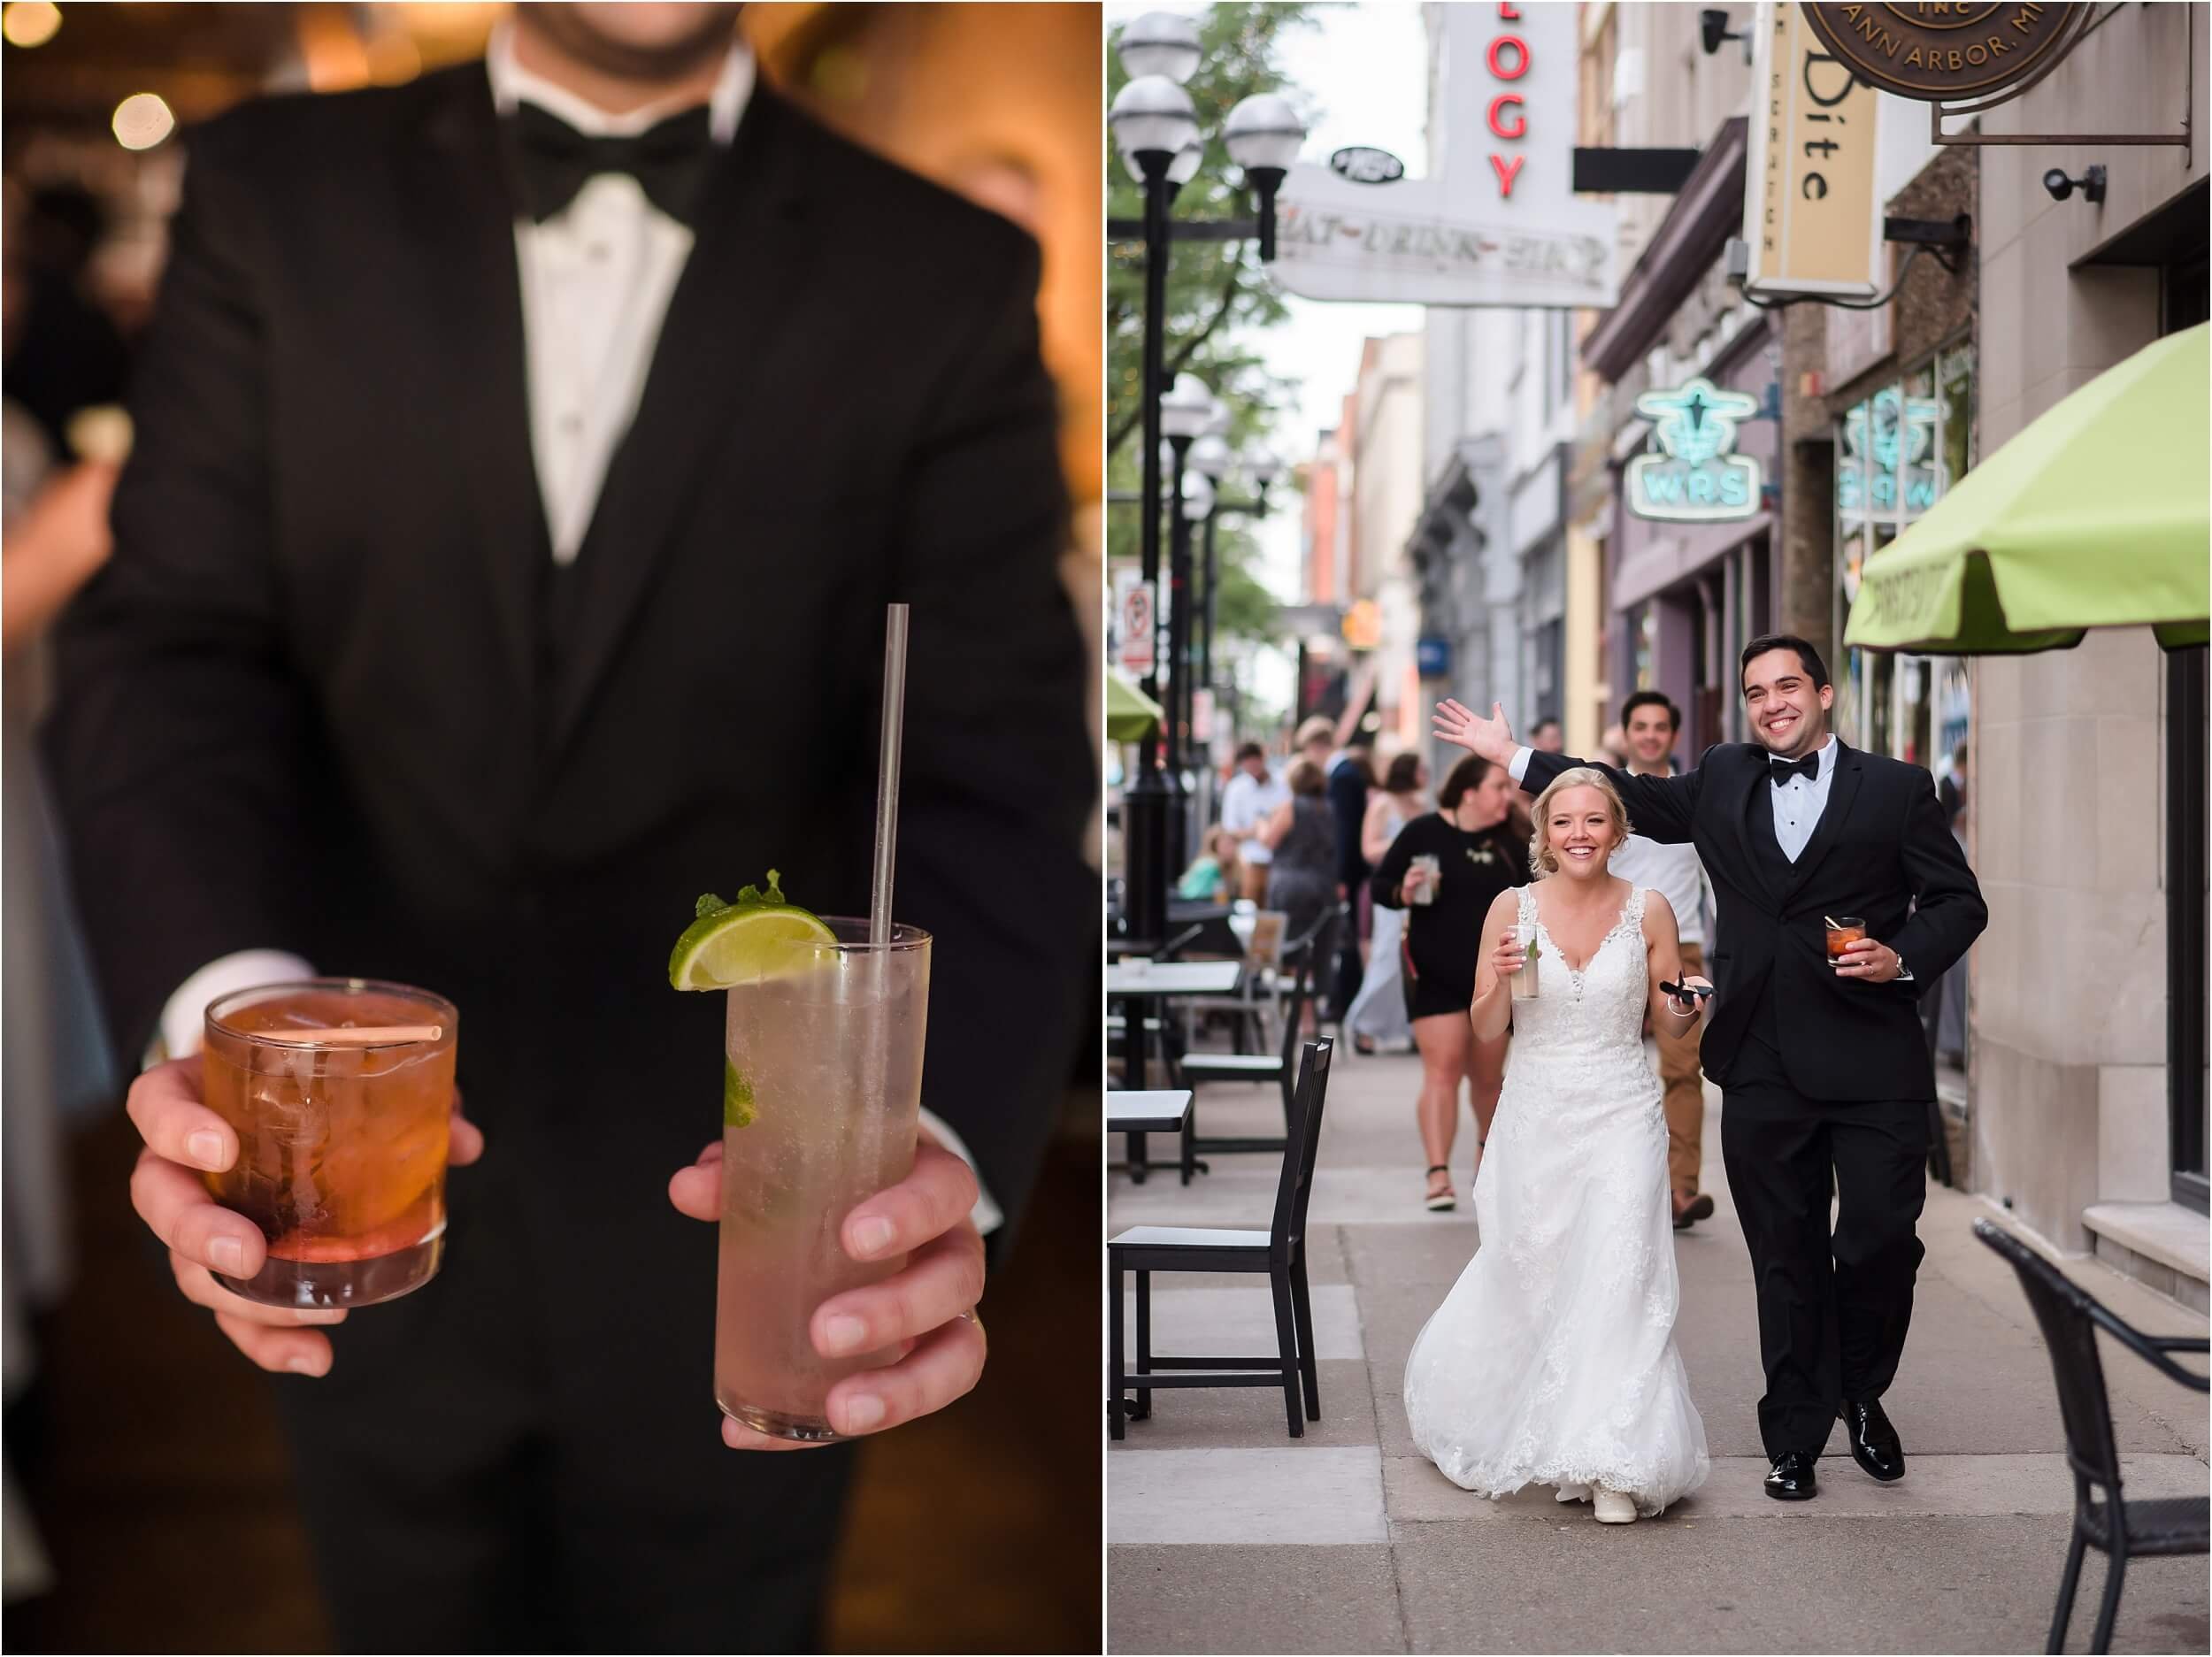  A couple walks into their wedding reception at Vinology Wine Bar.  